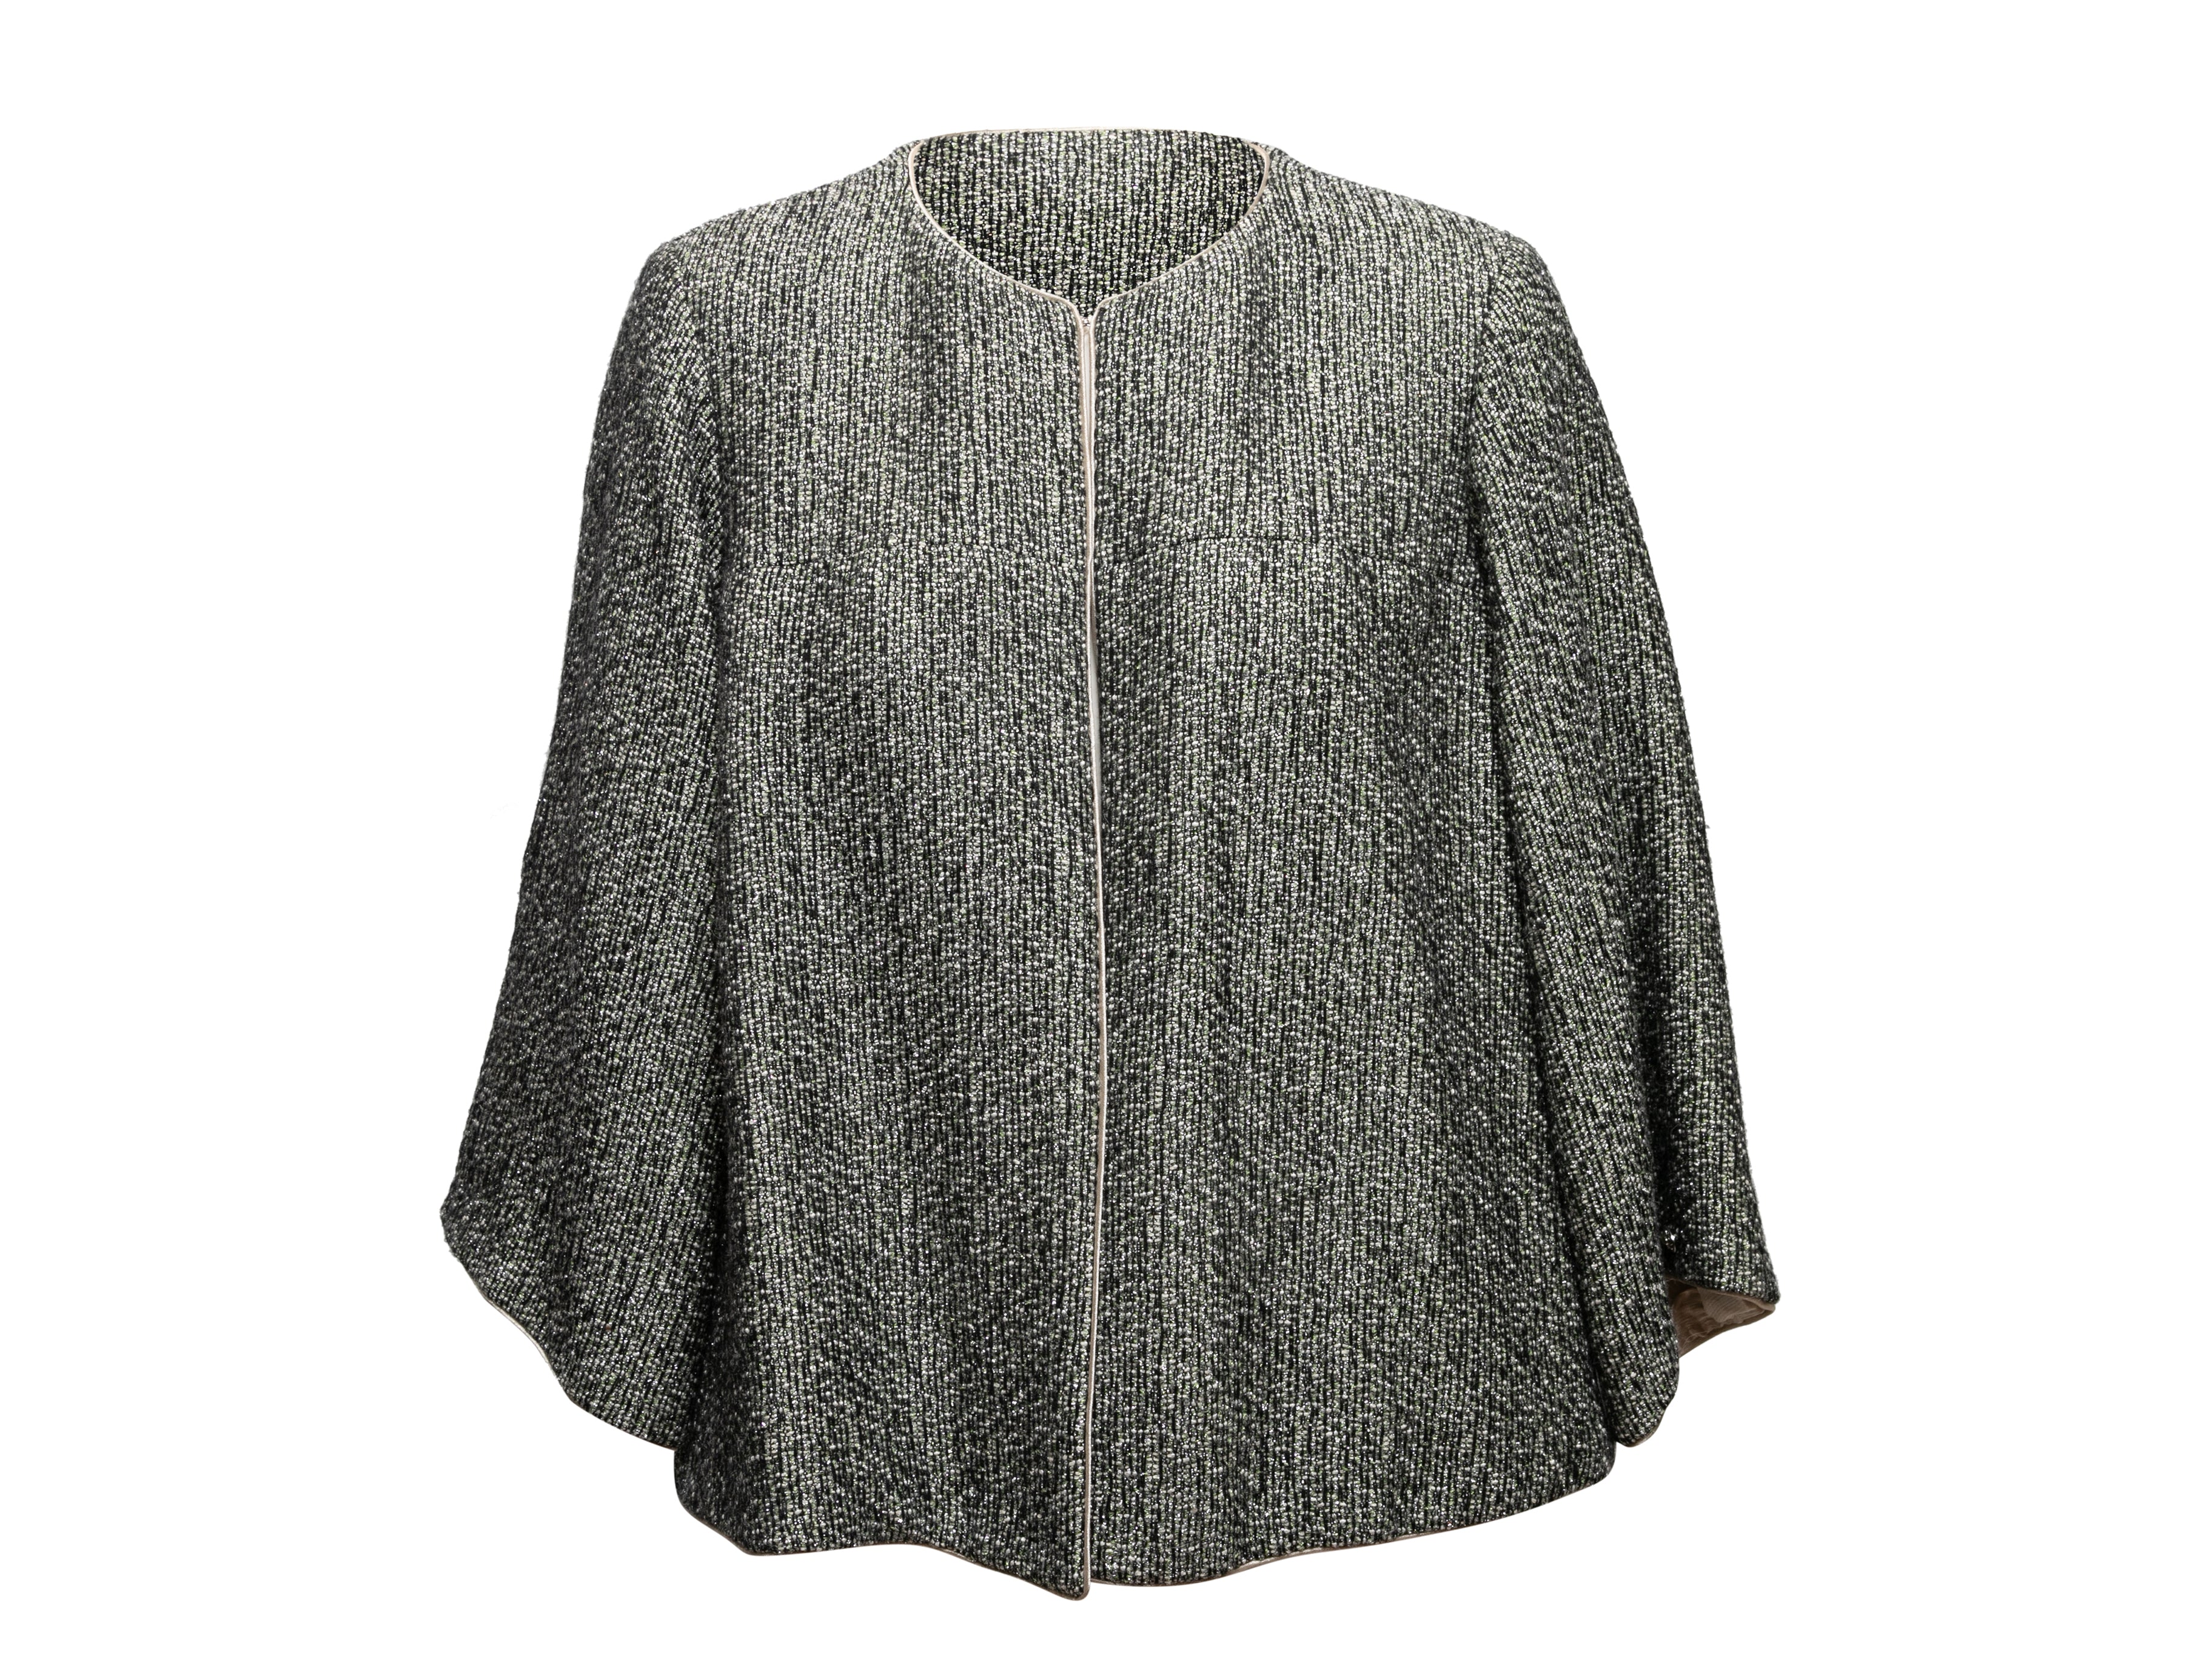 Black & Multicolor Alpaca-Blend Tweed Jacket Size FR 44